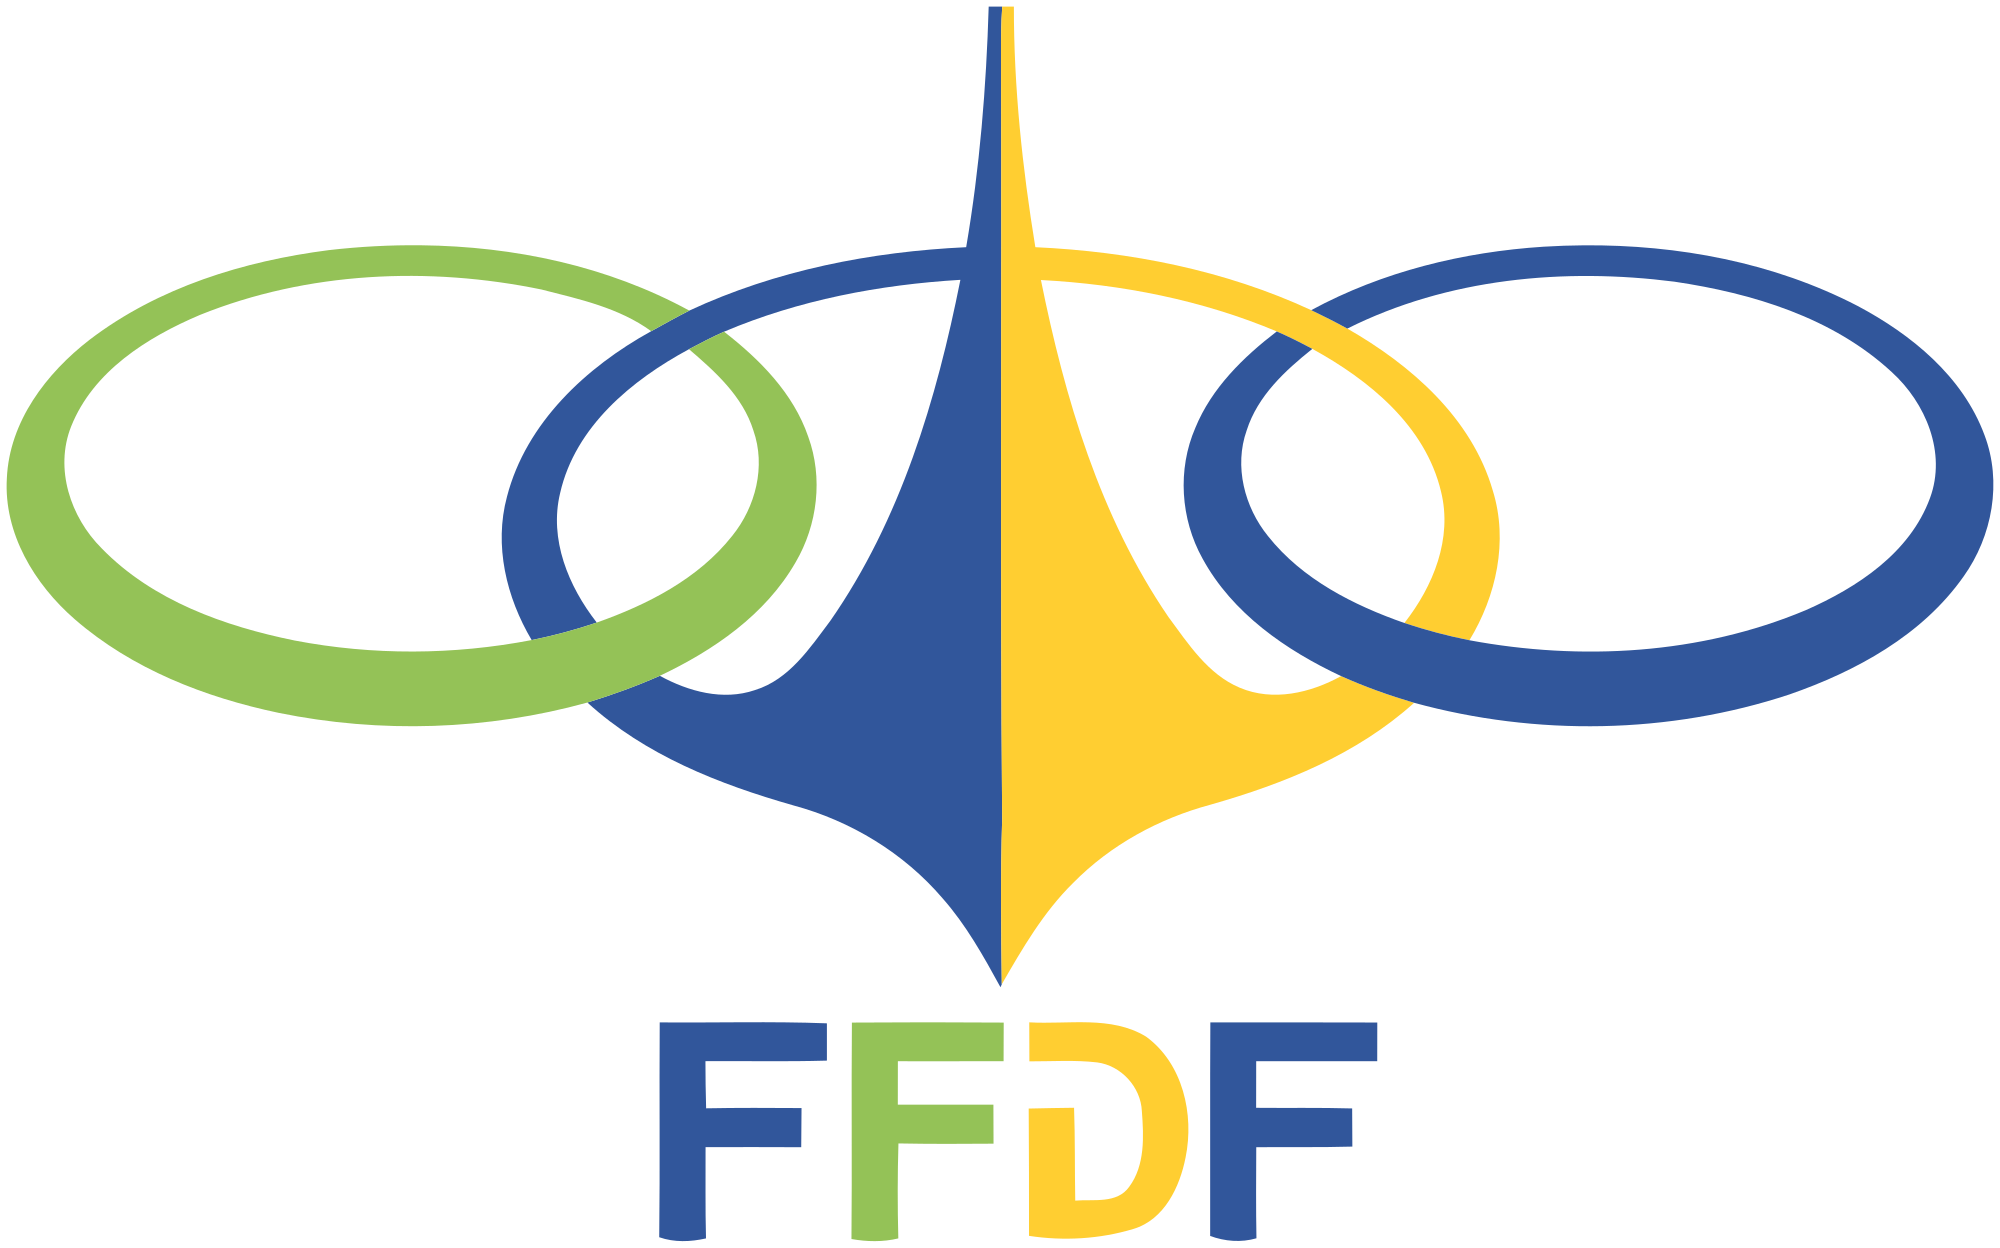 Resultado de imagem para FUTEBOL - BRASILIENSE - ESTADUAL  - logos